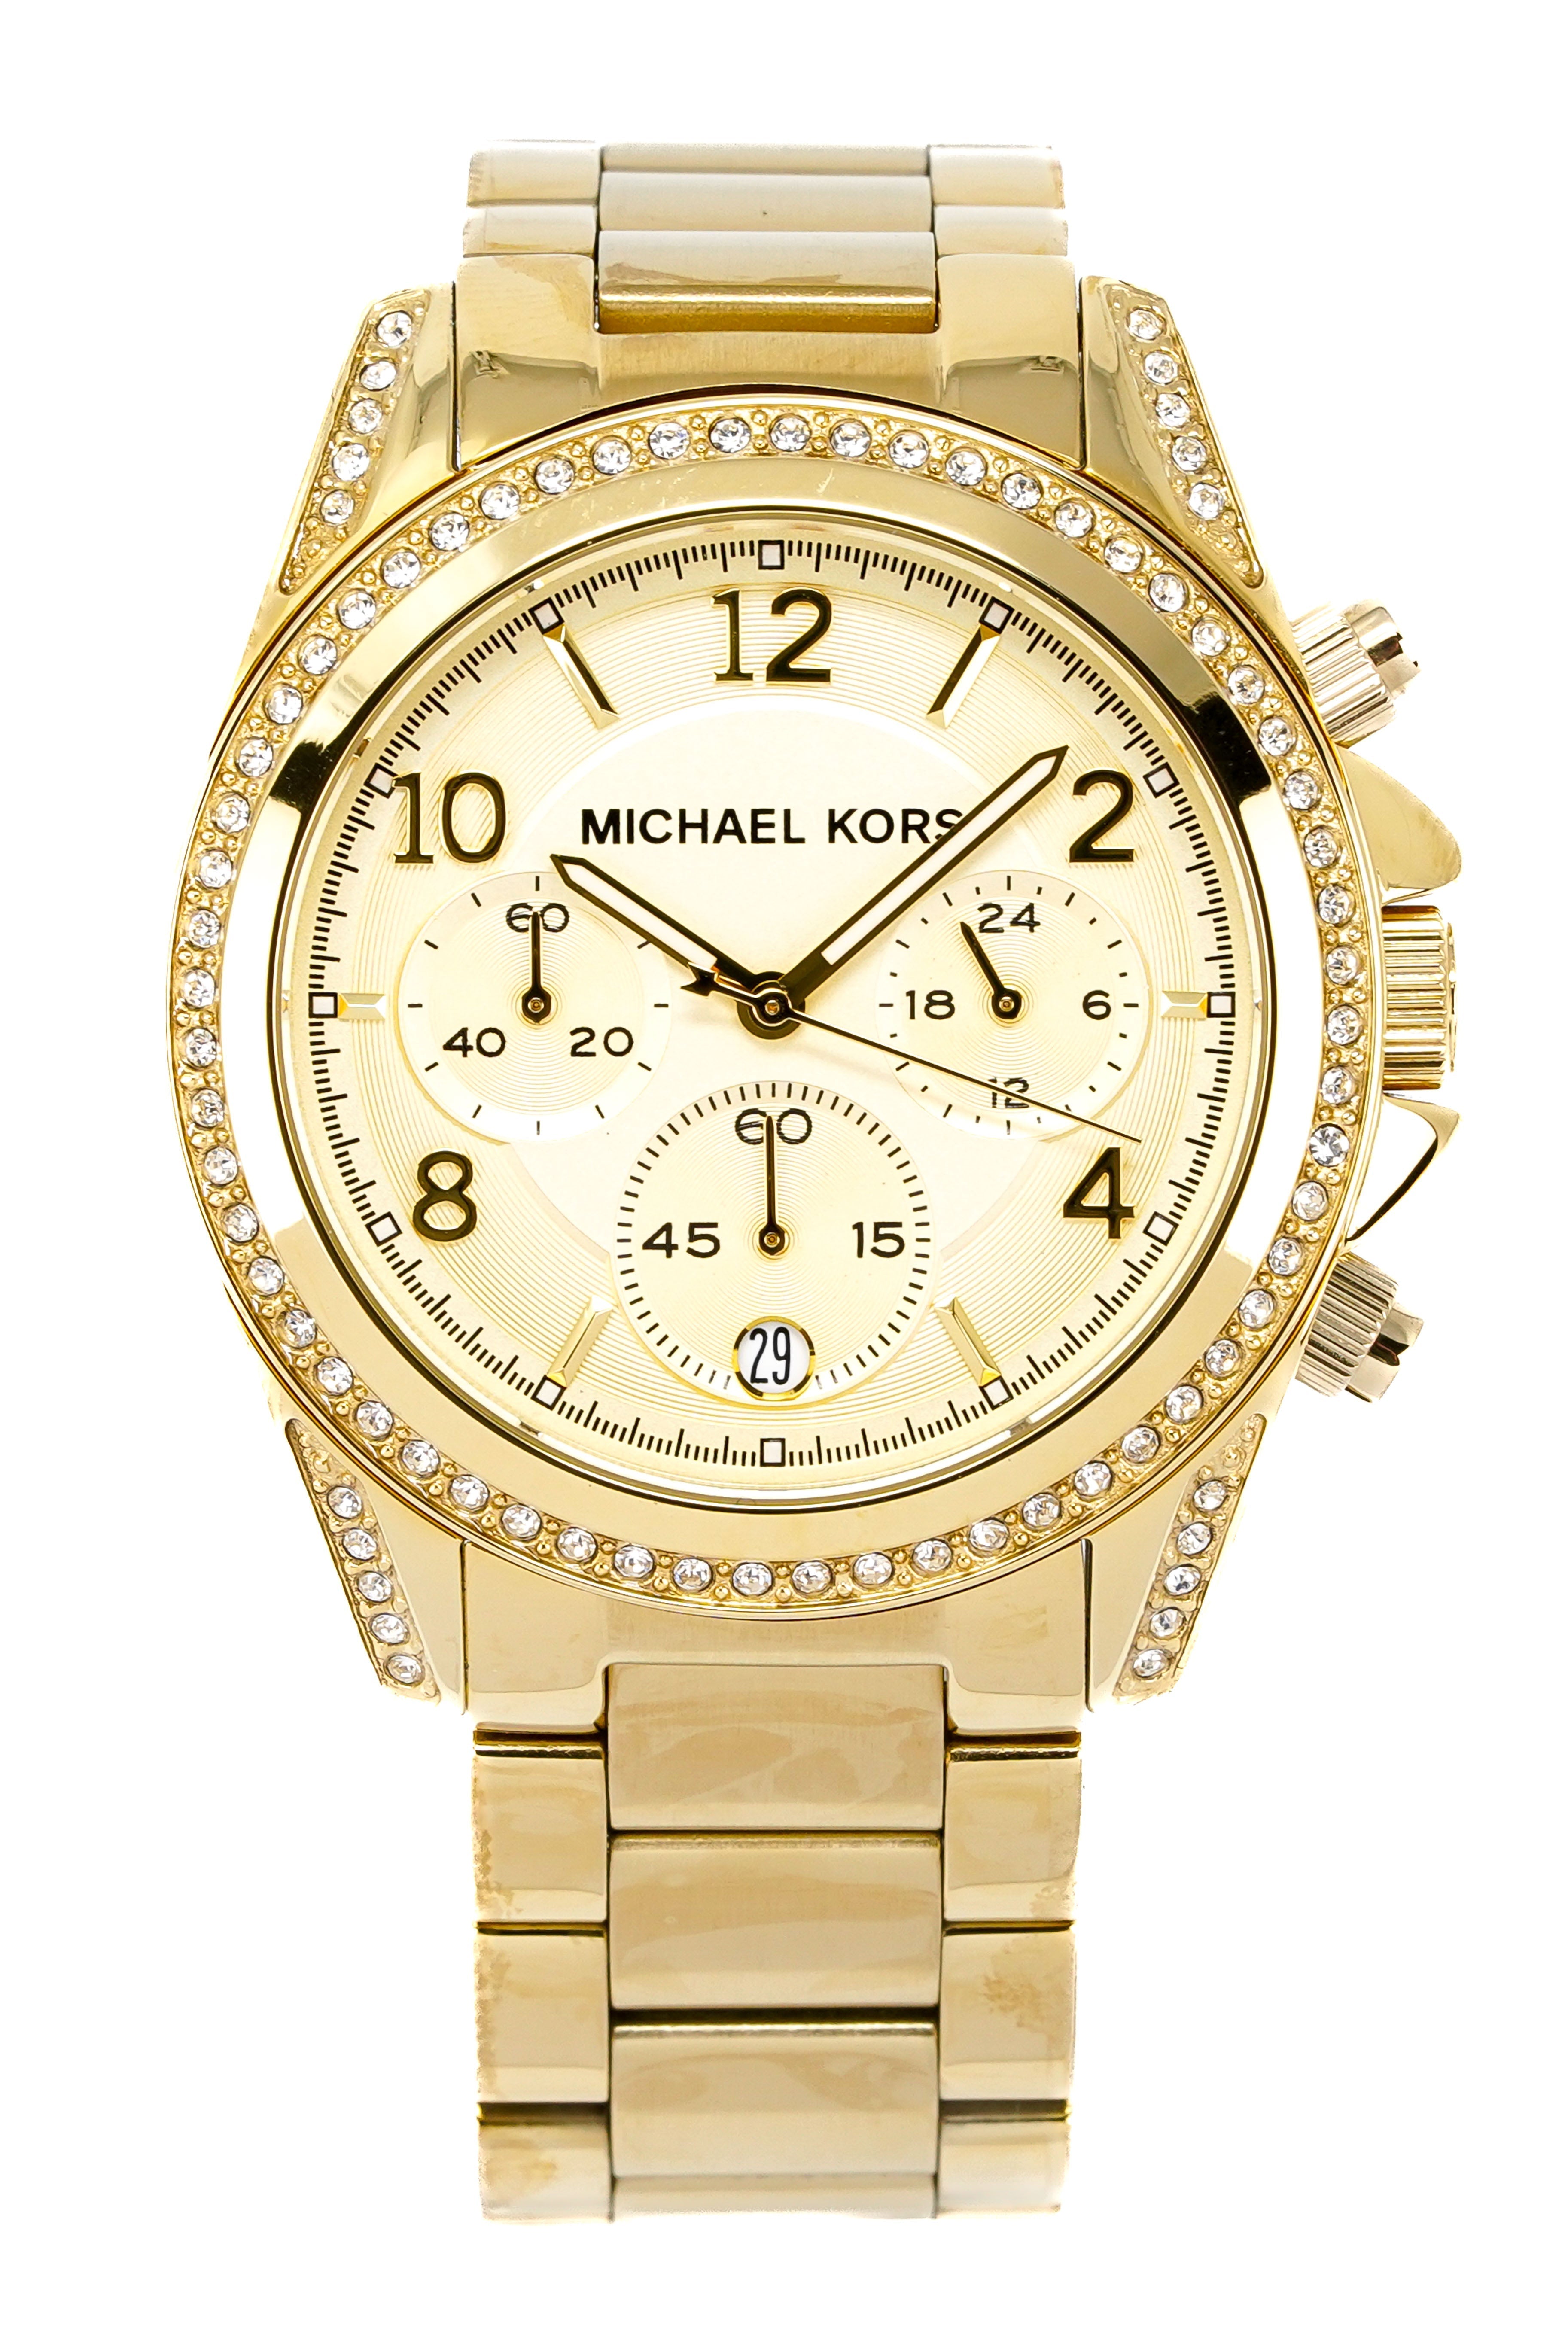 Michael Kors Golden Blair Glitz Women's Watch MK5166 Original With 1 Year  Warranty For Mechanism | Lazada PH